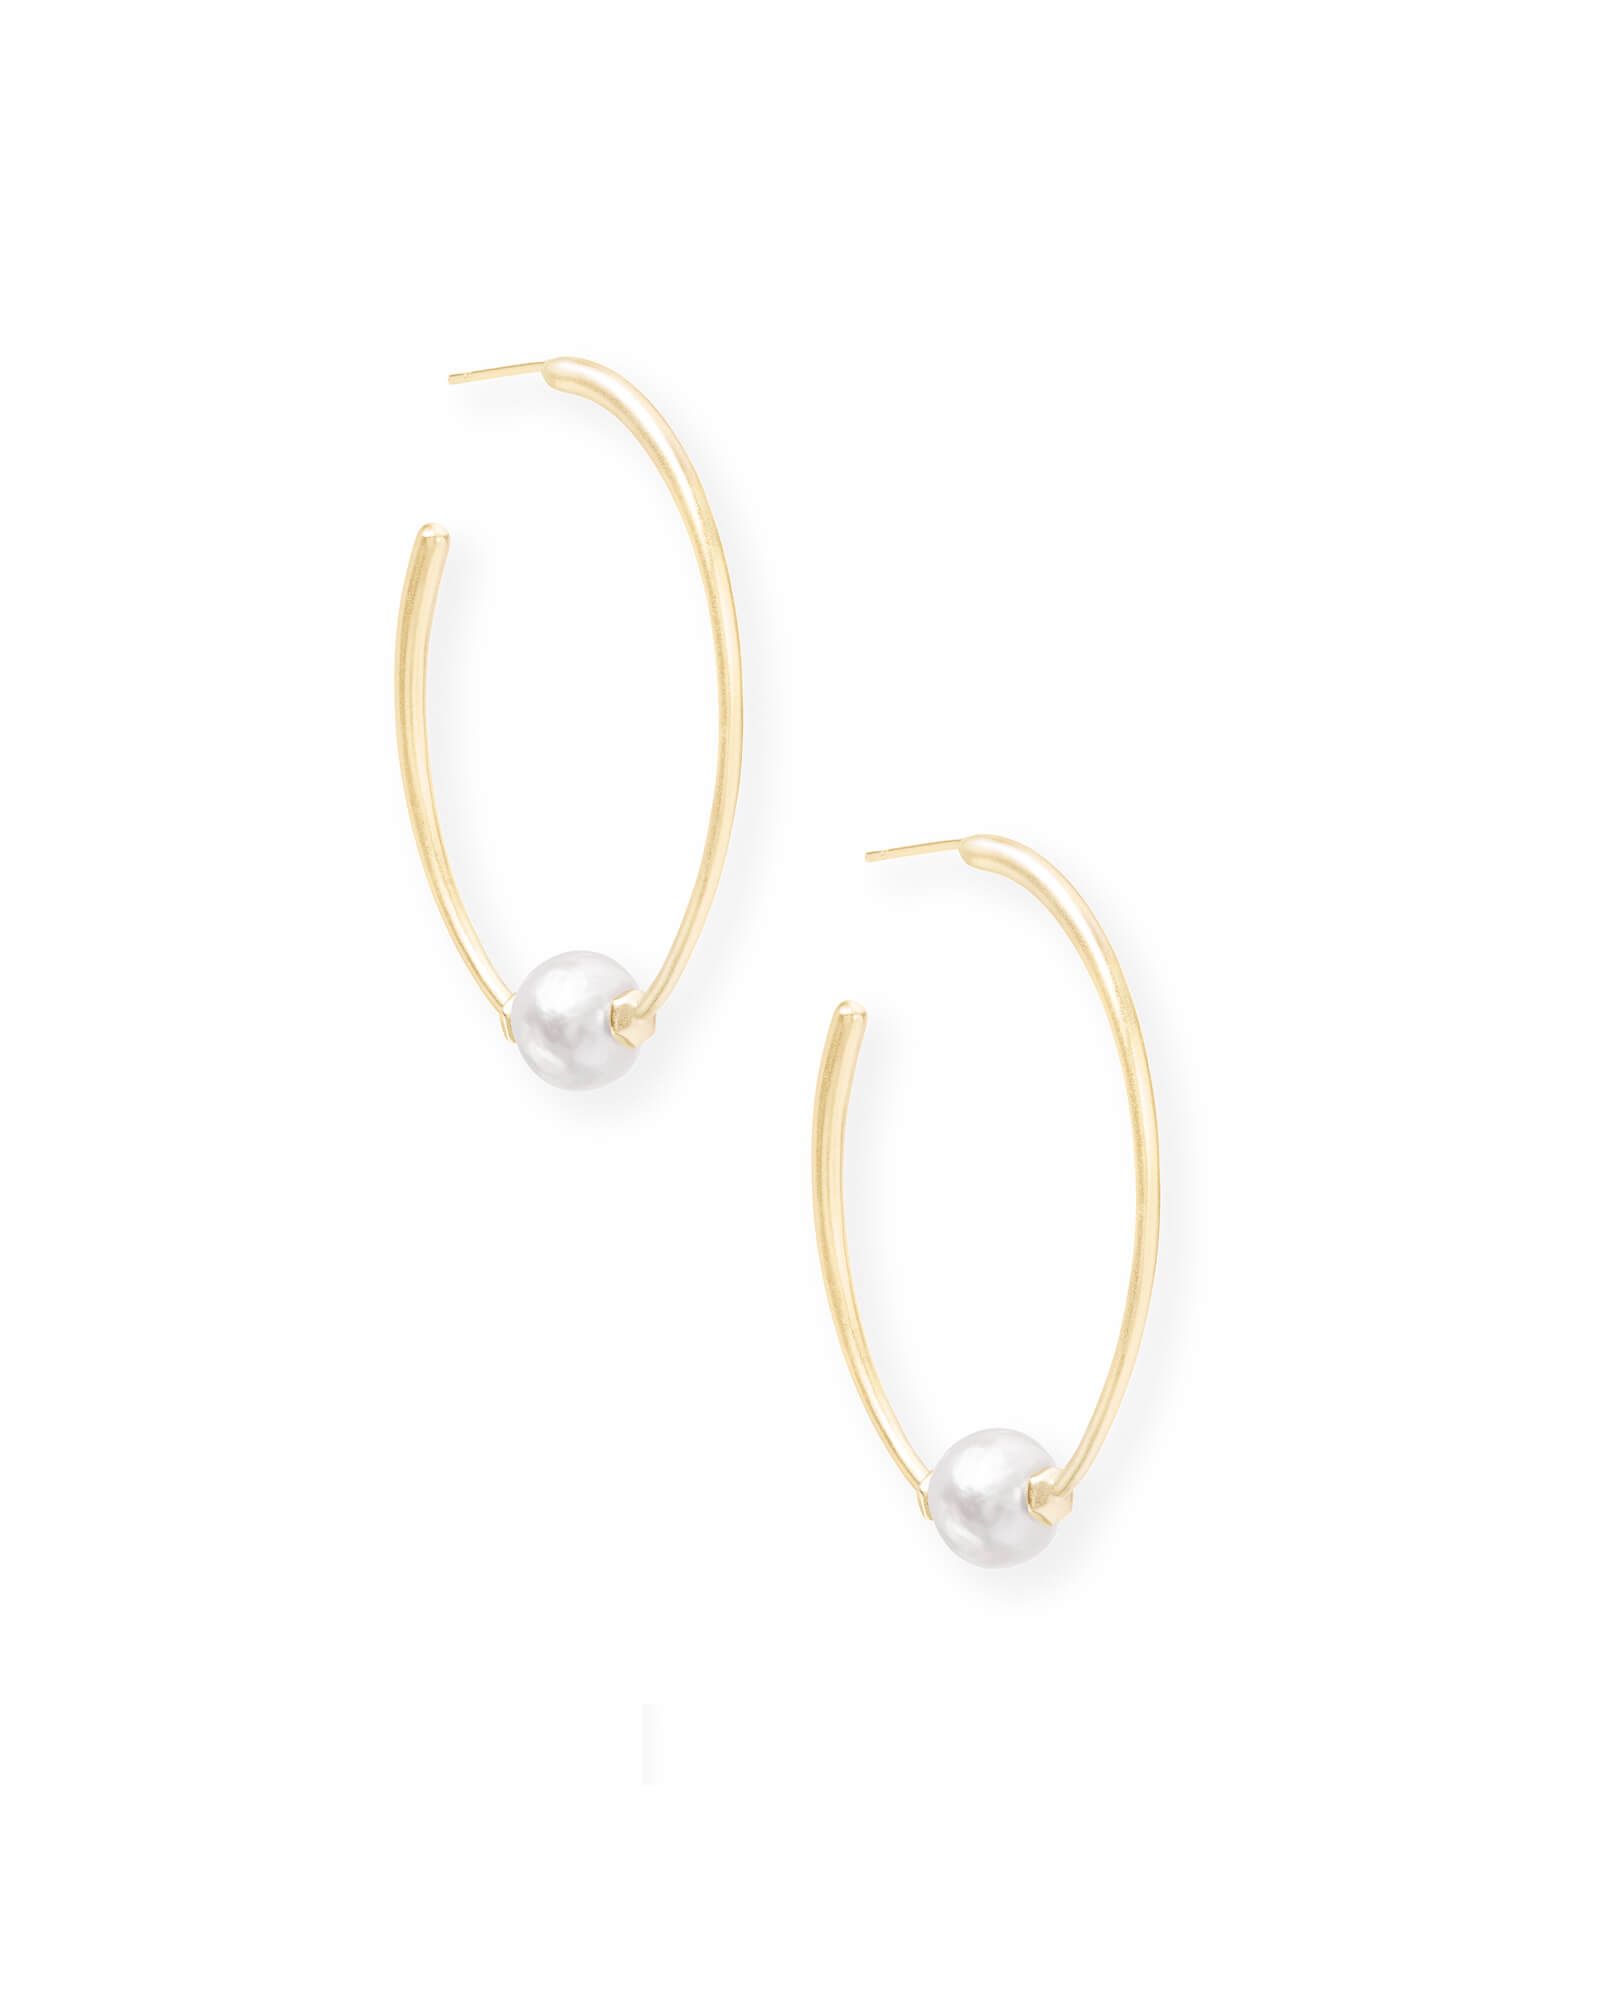 Regina Gold Hoop Earrings in Pearl | Kendra Scott